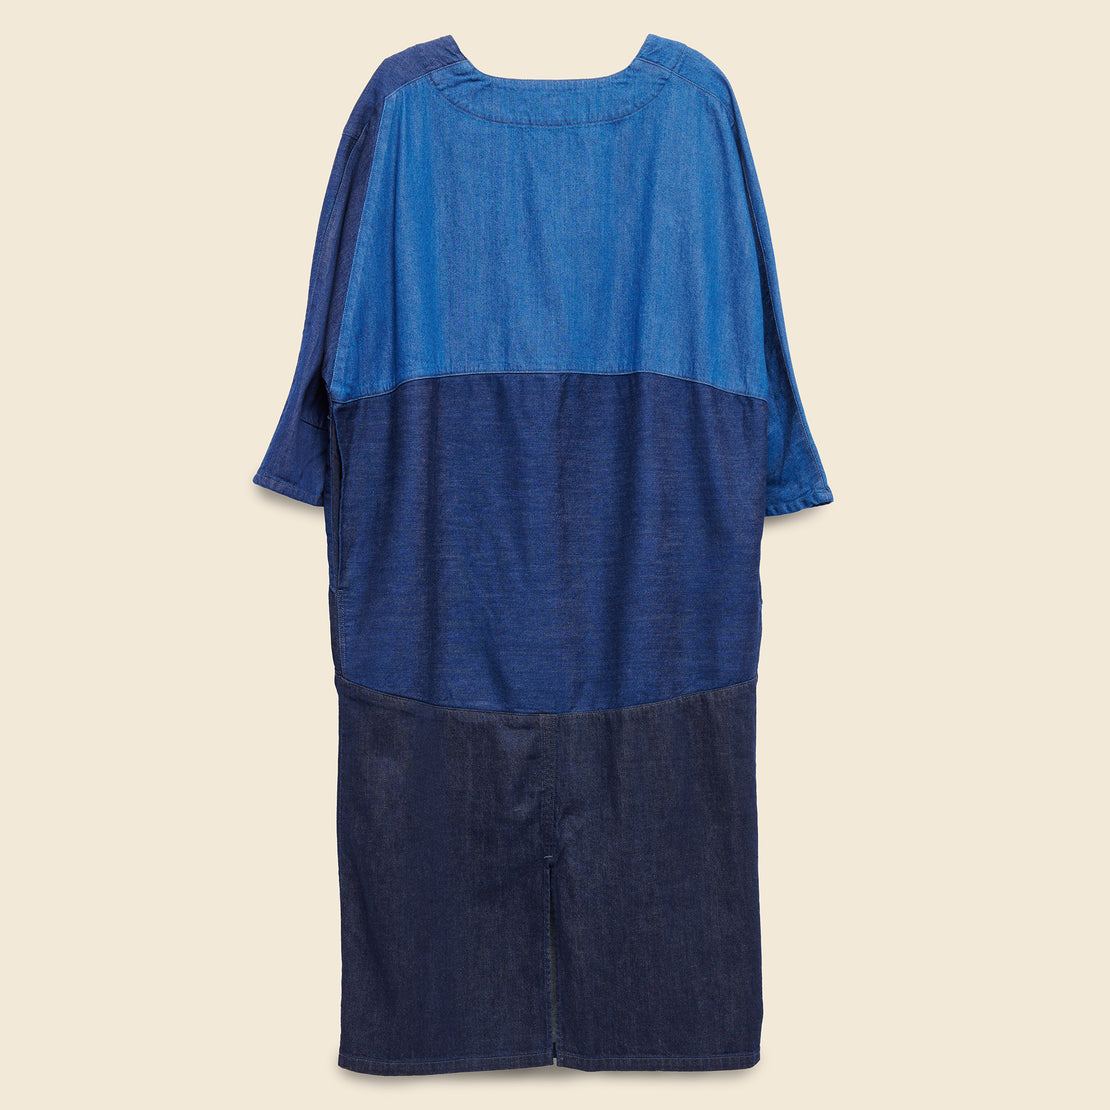 3Tones Denim Gimmick Art Dress - Indigo - Kapital - STAG Provisions - W - Onepiece - Dress